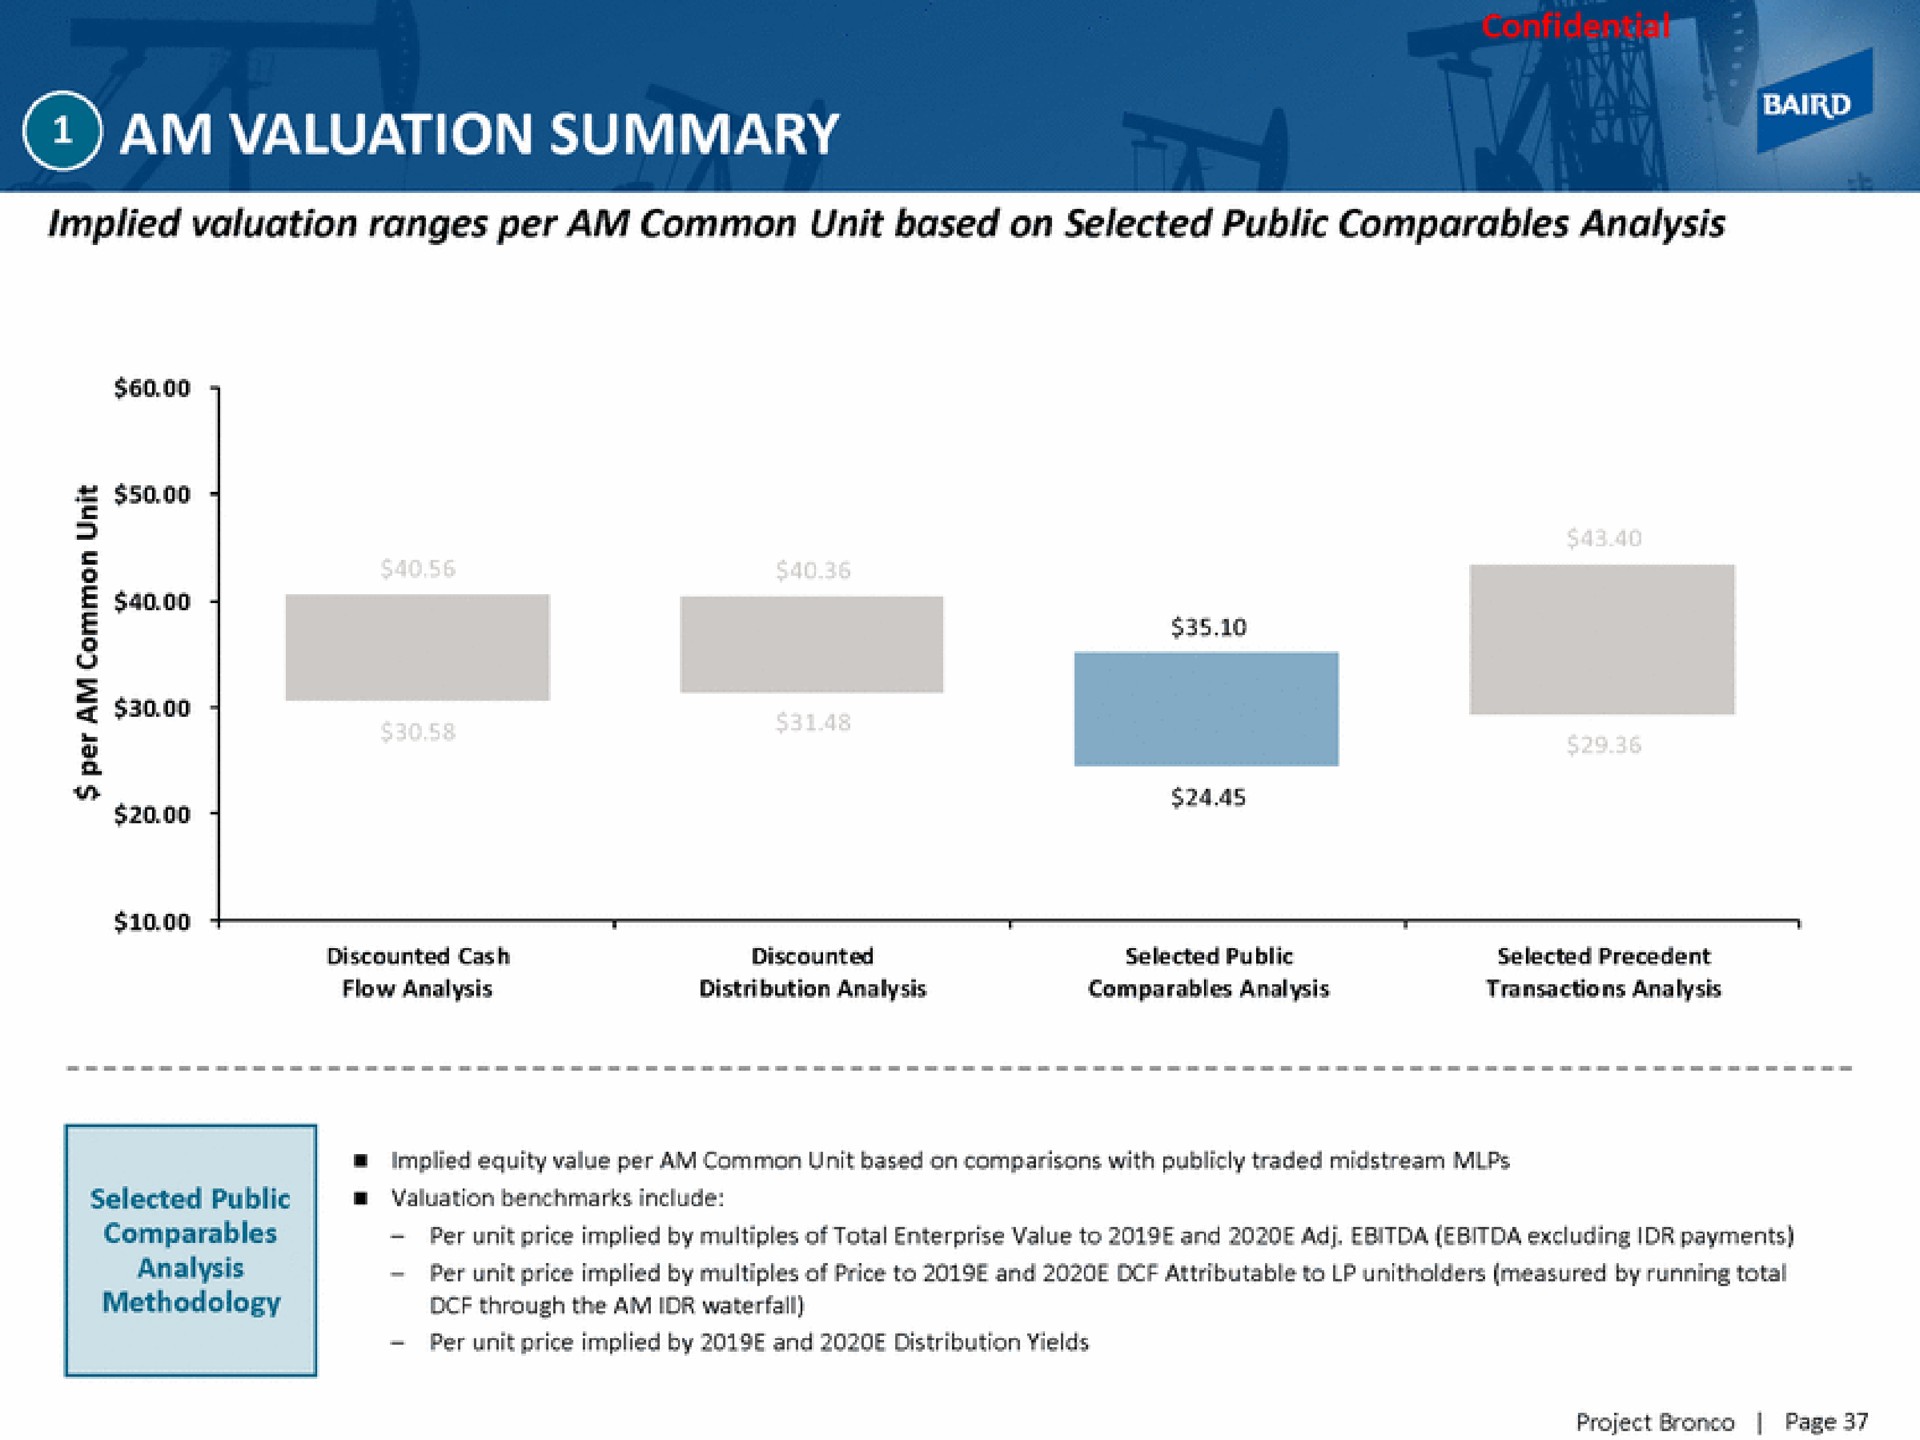 am valuation summary | Baird